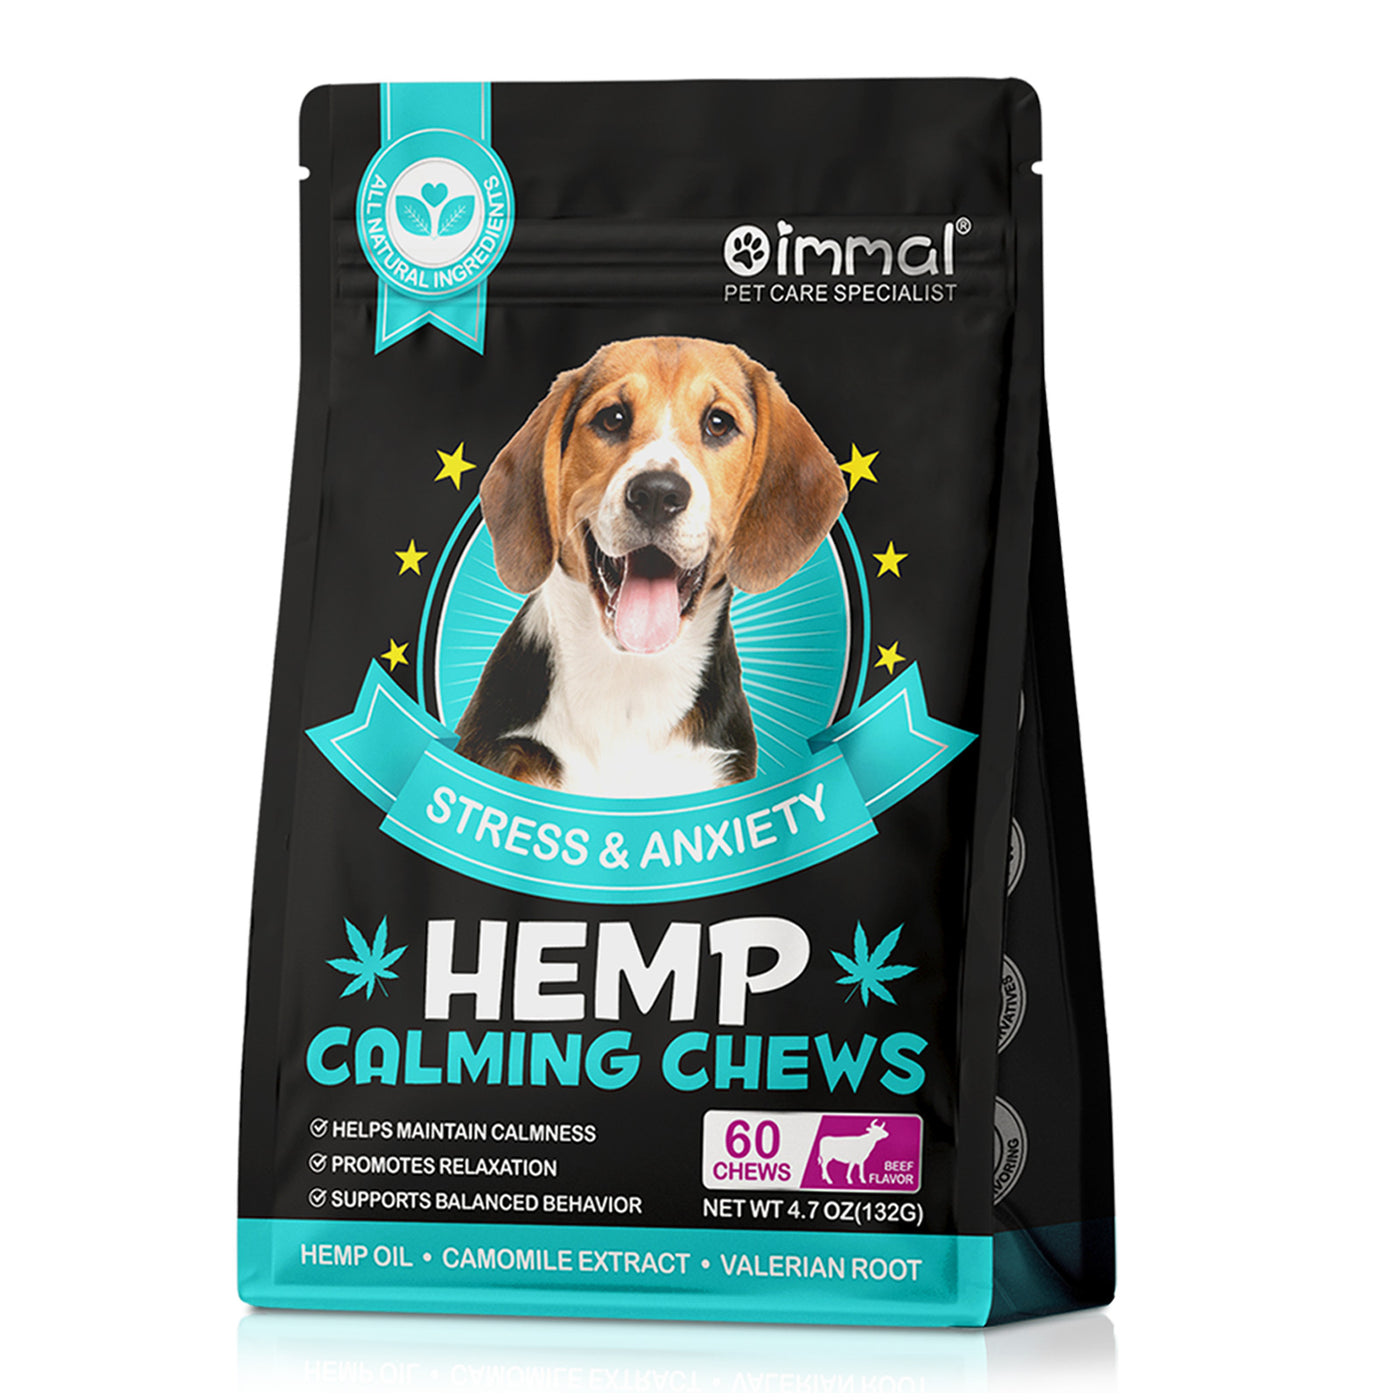 Oimmal Hemp Calming Chews - 60 Chews / Beef Flavor - 5 Packs